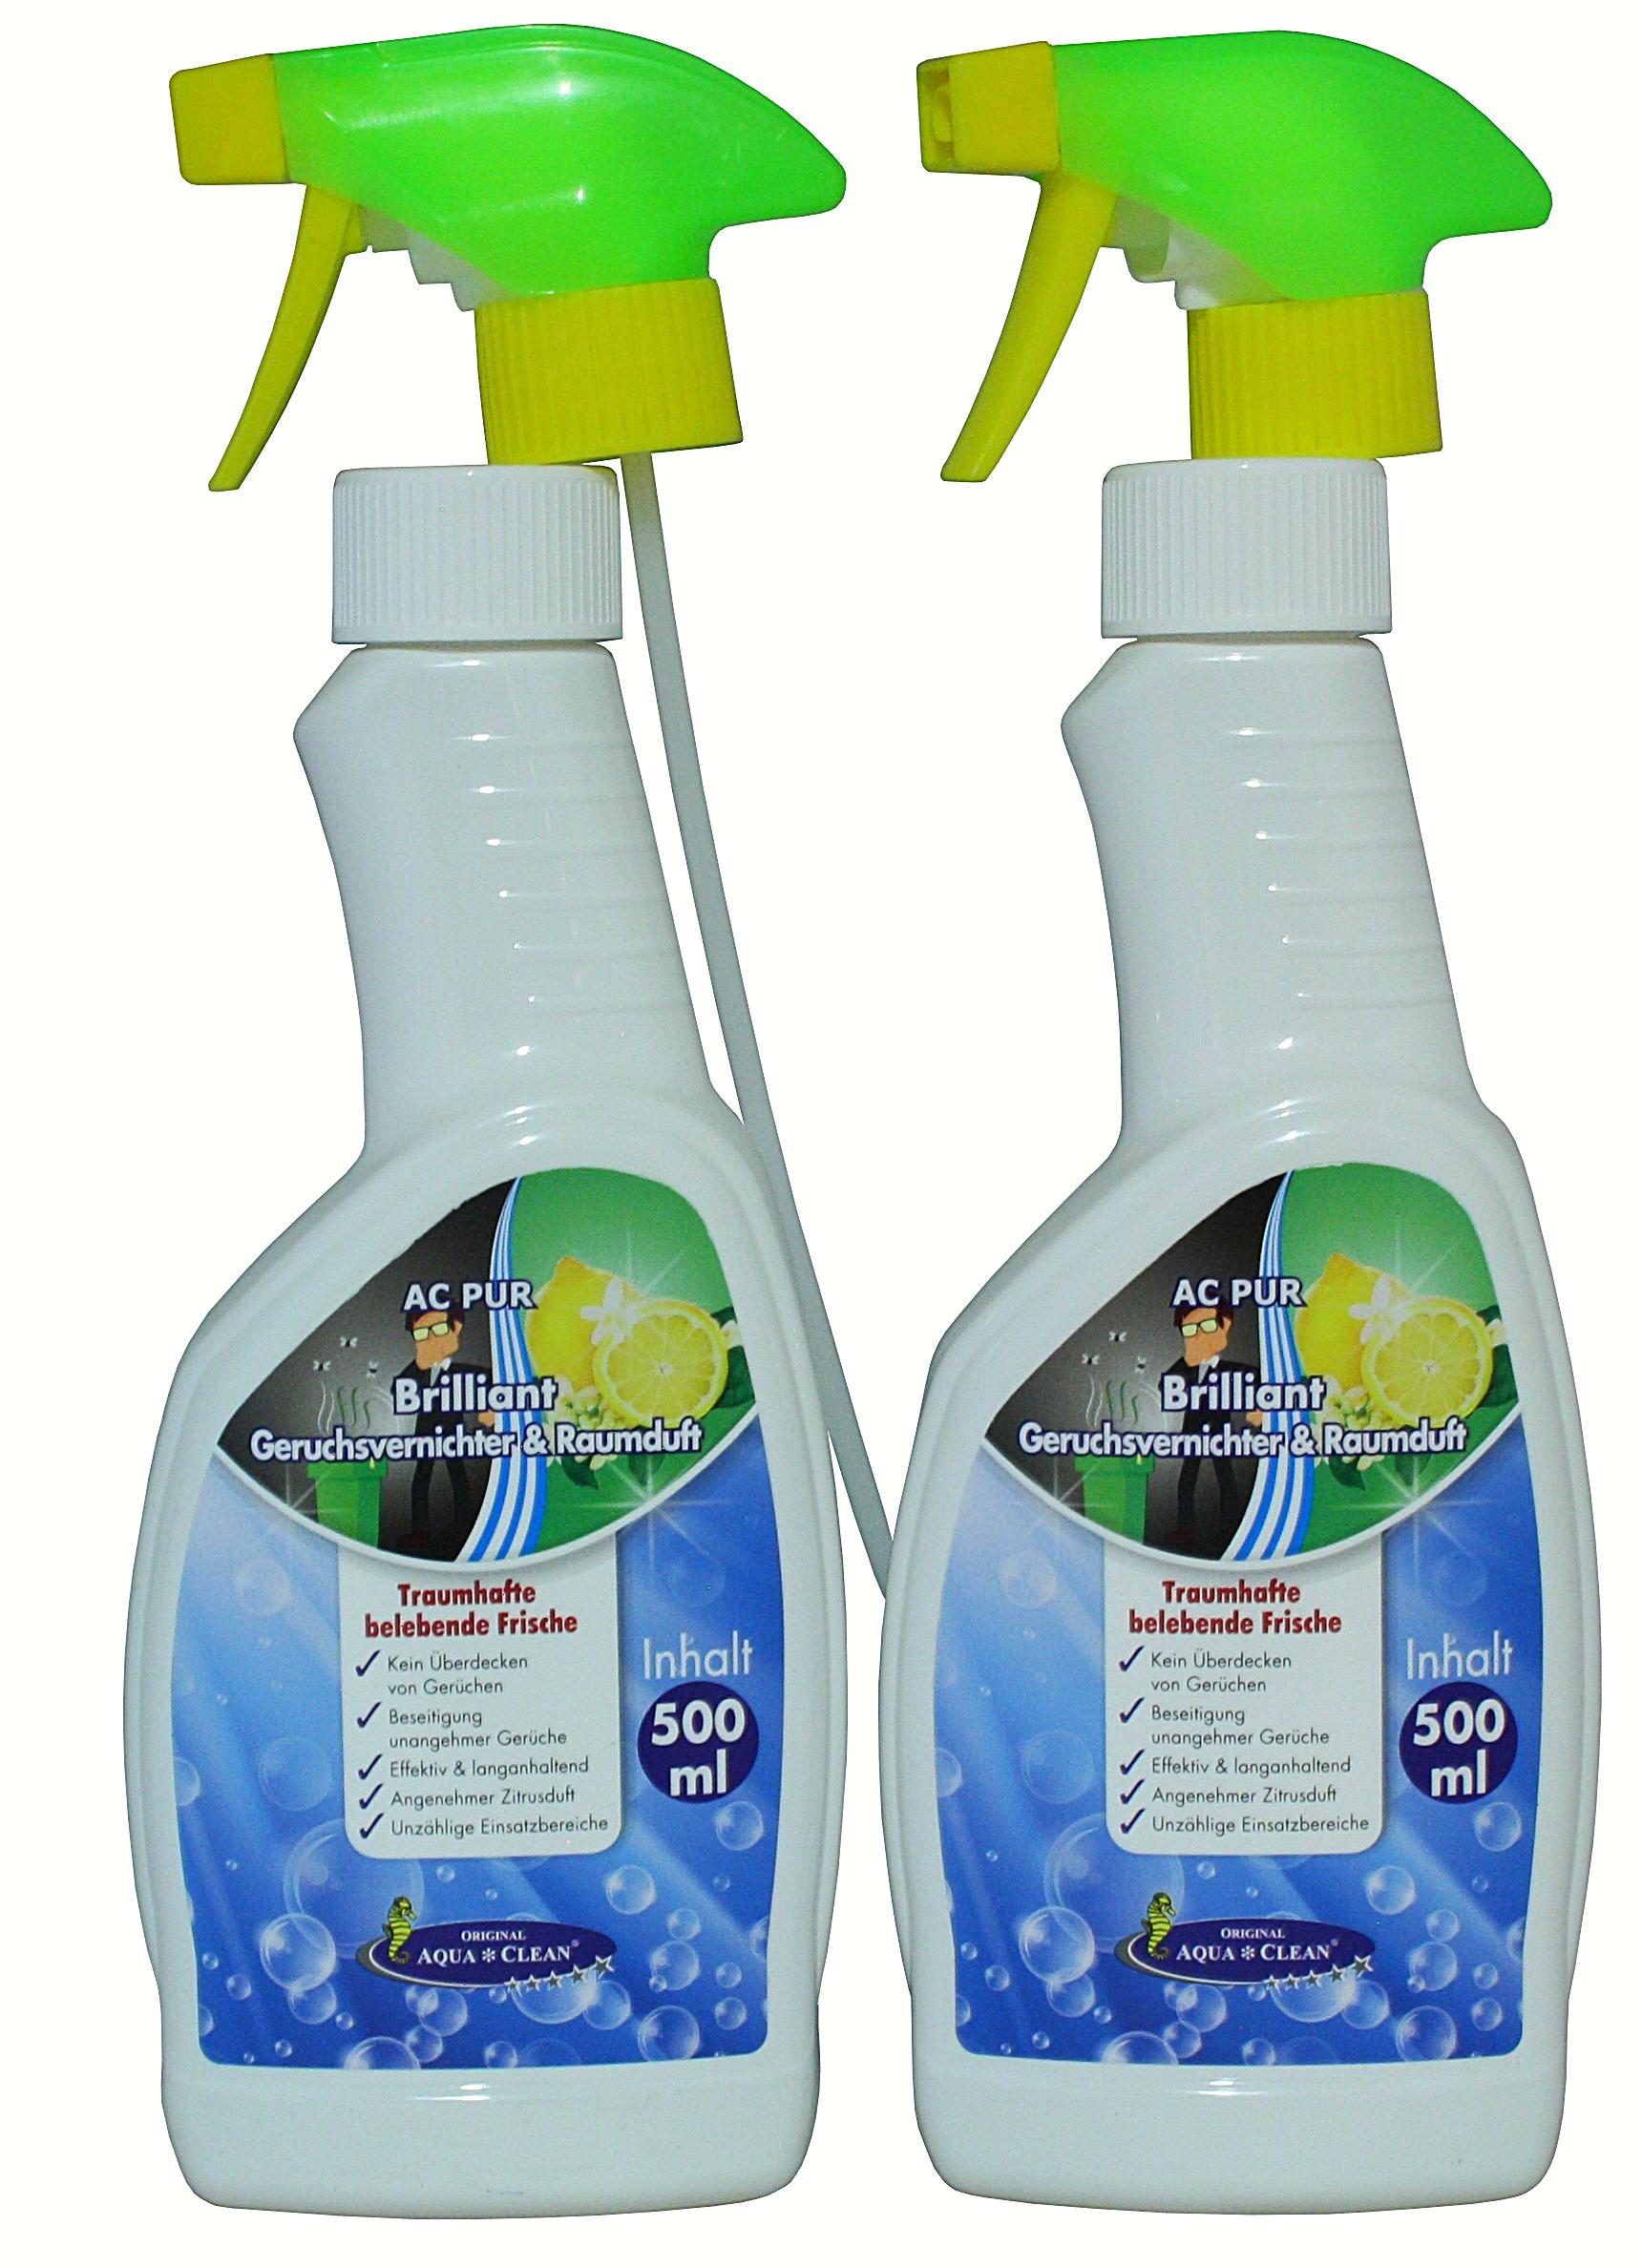 AQUA CLEAN Brilliant Geruchsvernichter & Raumduft 2x 500ml